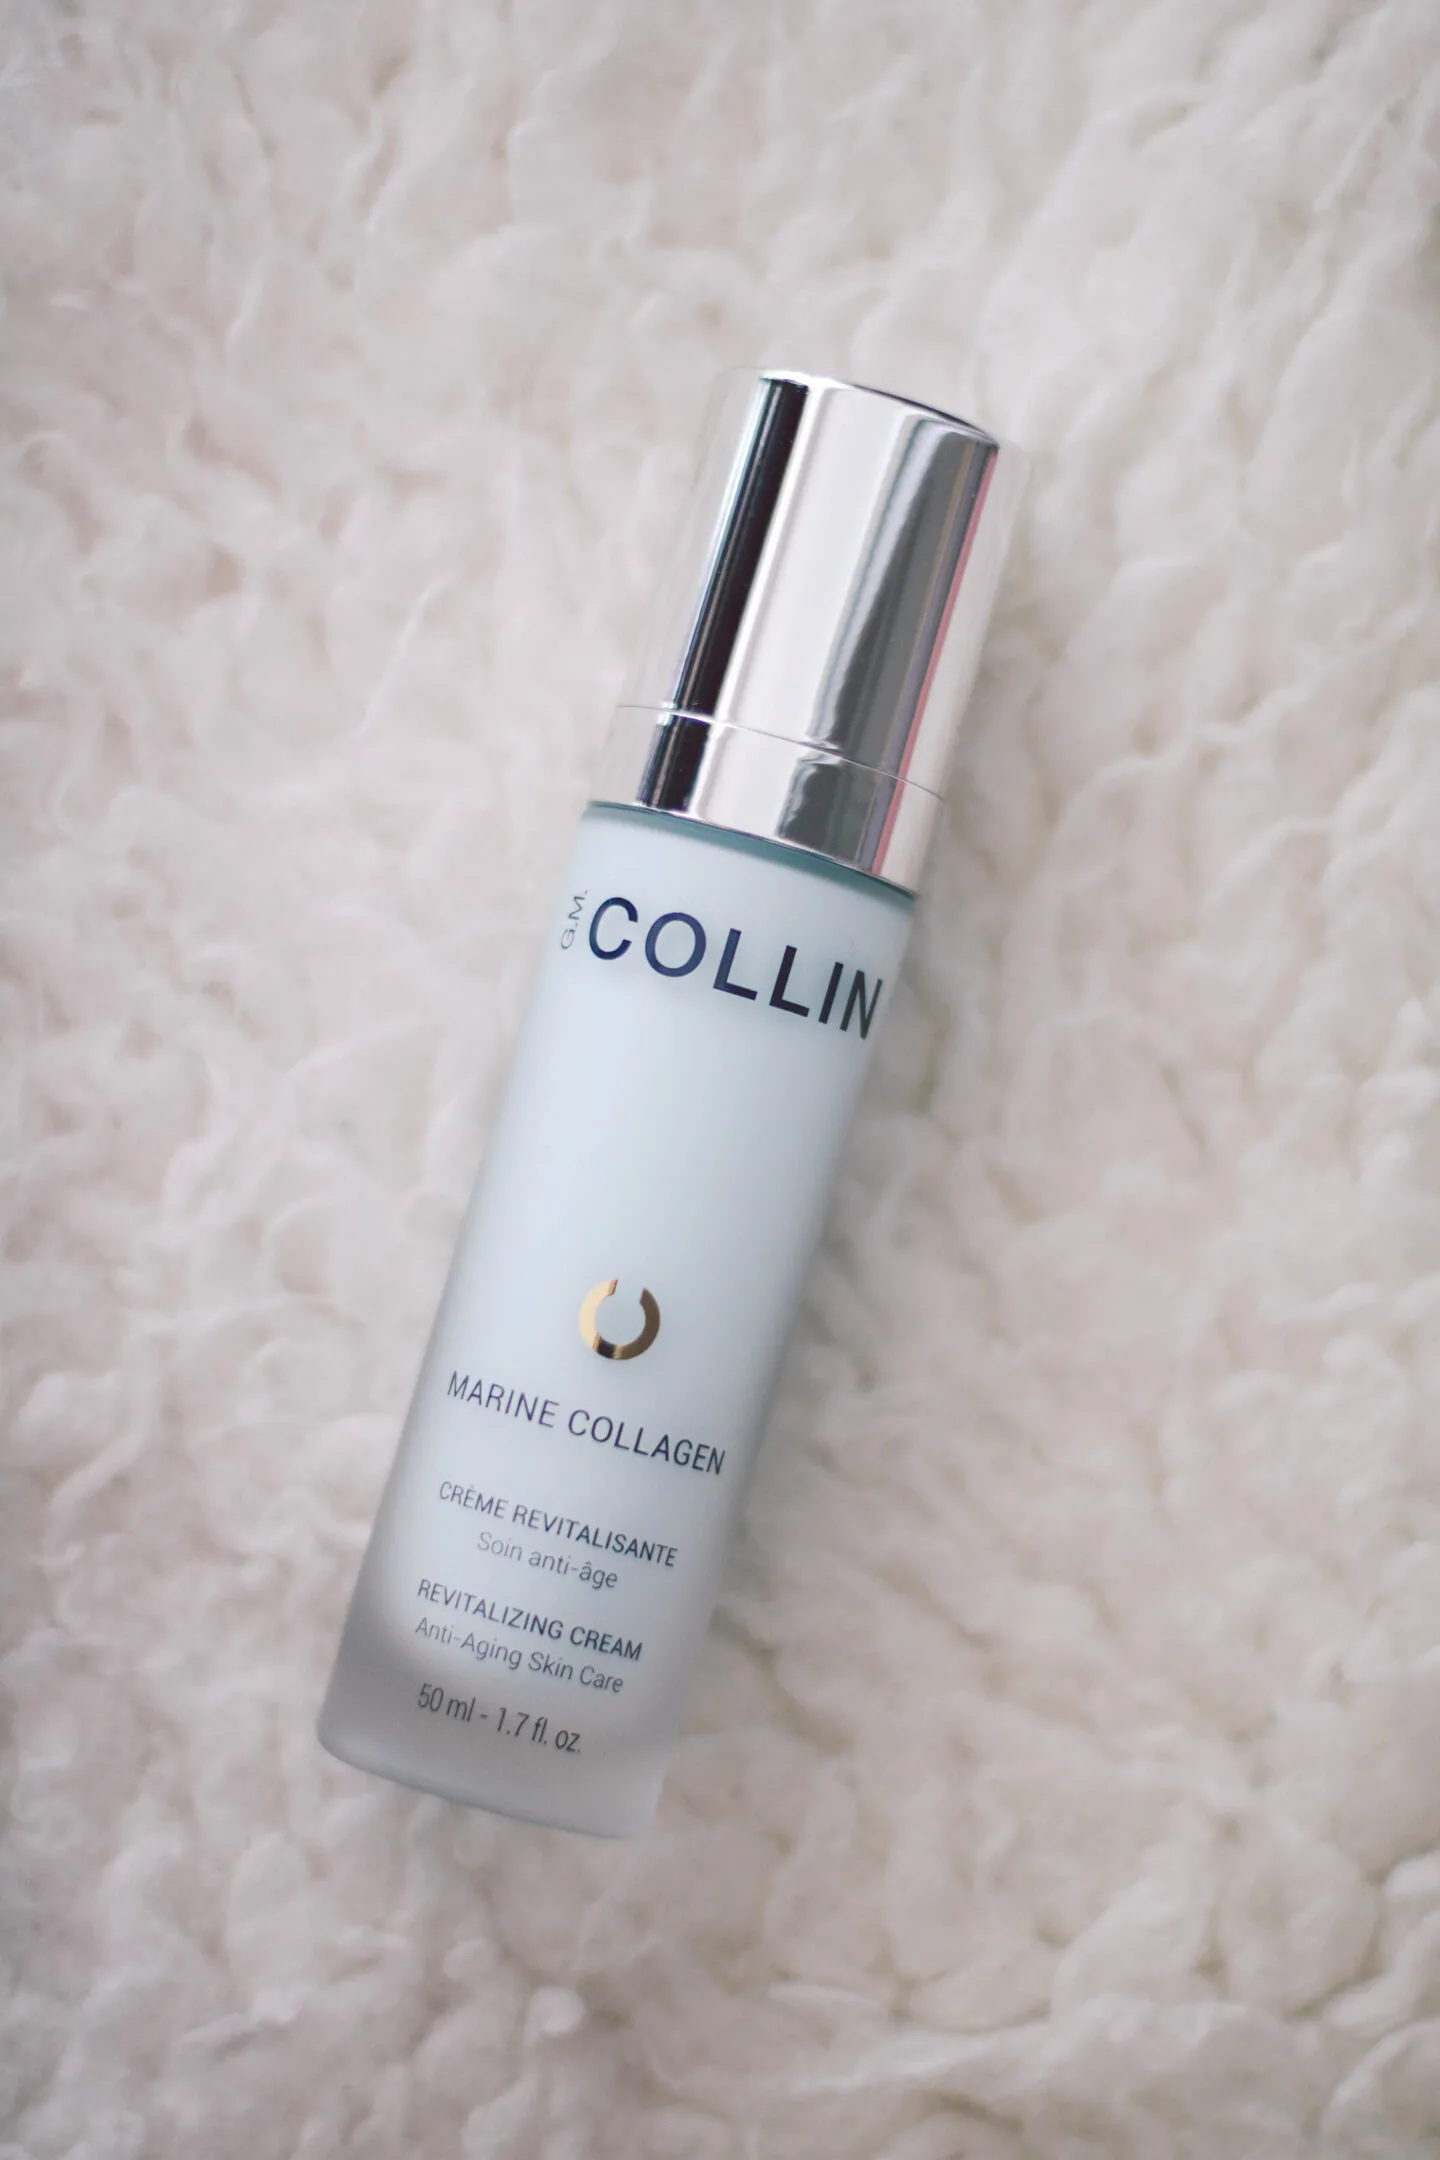 G.M. Collin Marine Collagen Revitalizing Cream - Beautysense Canada review